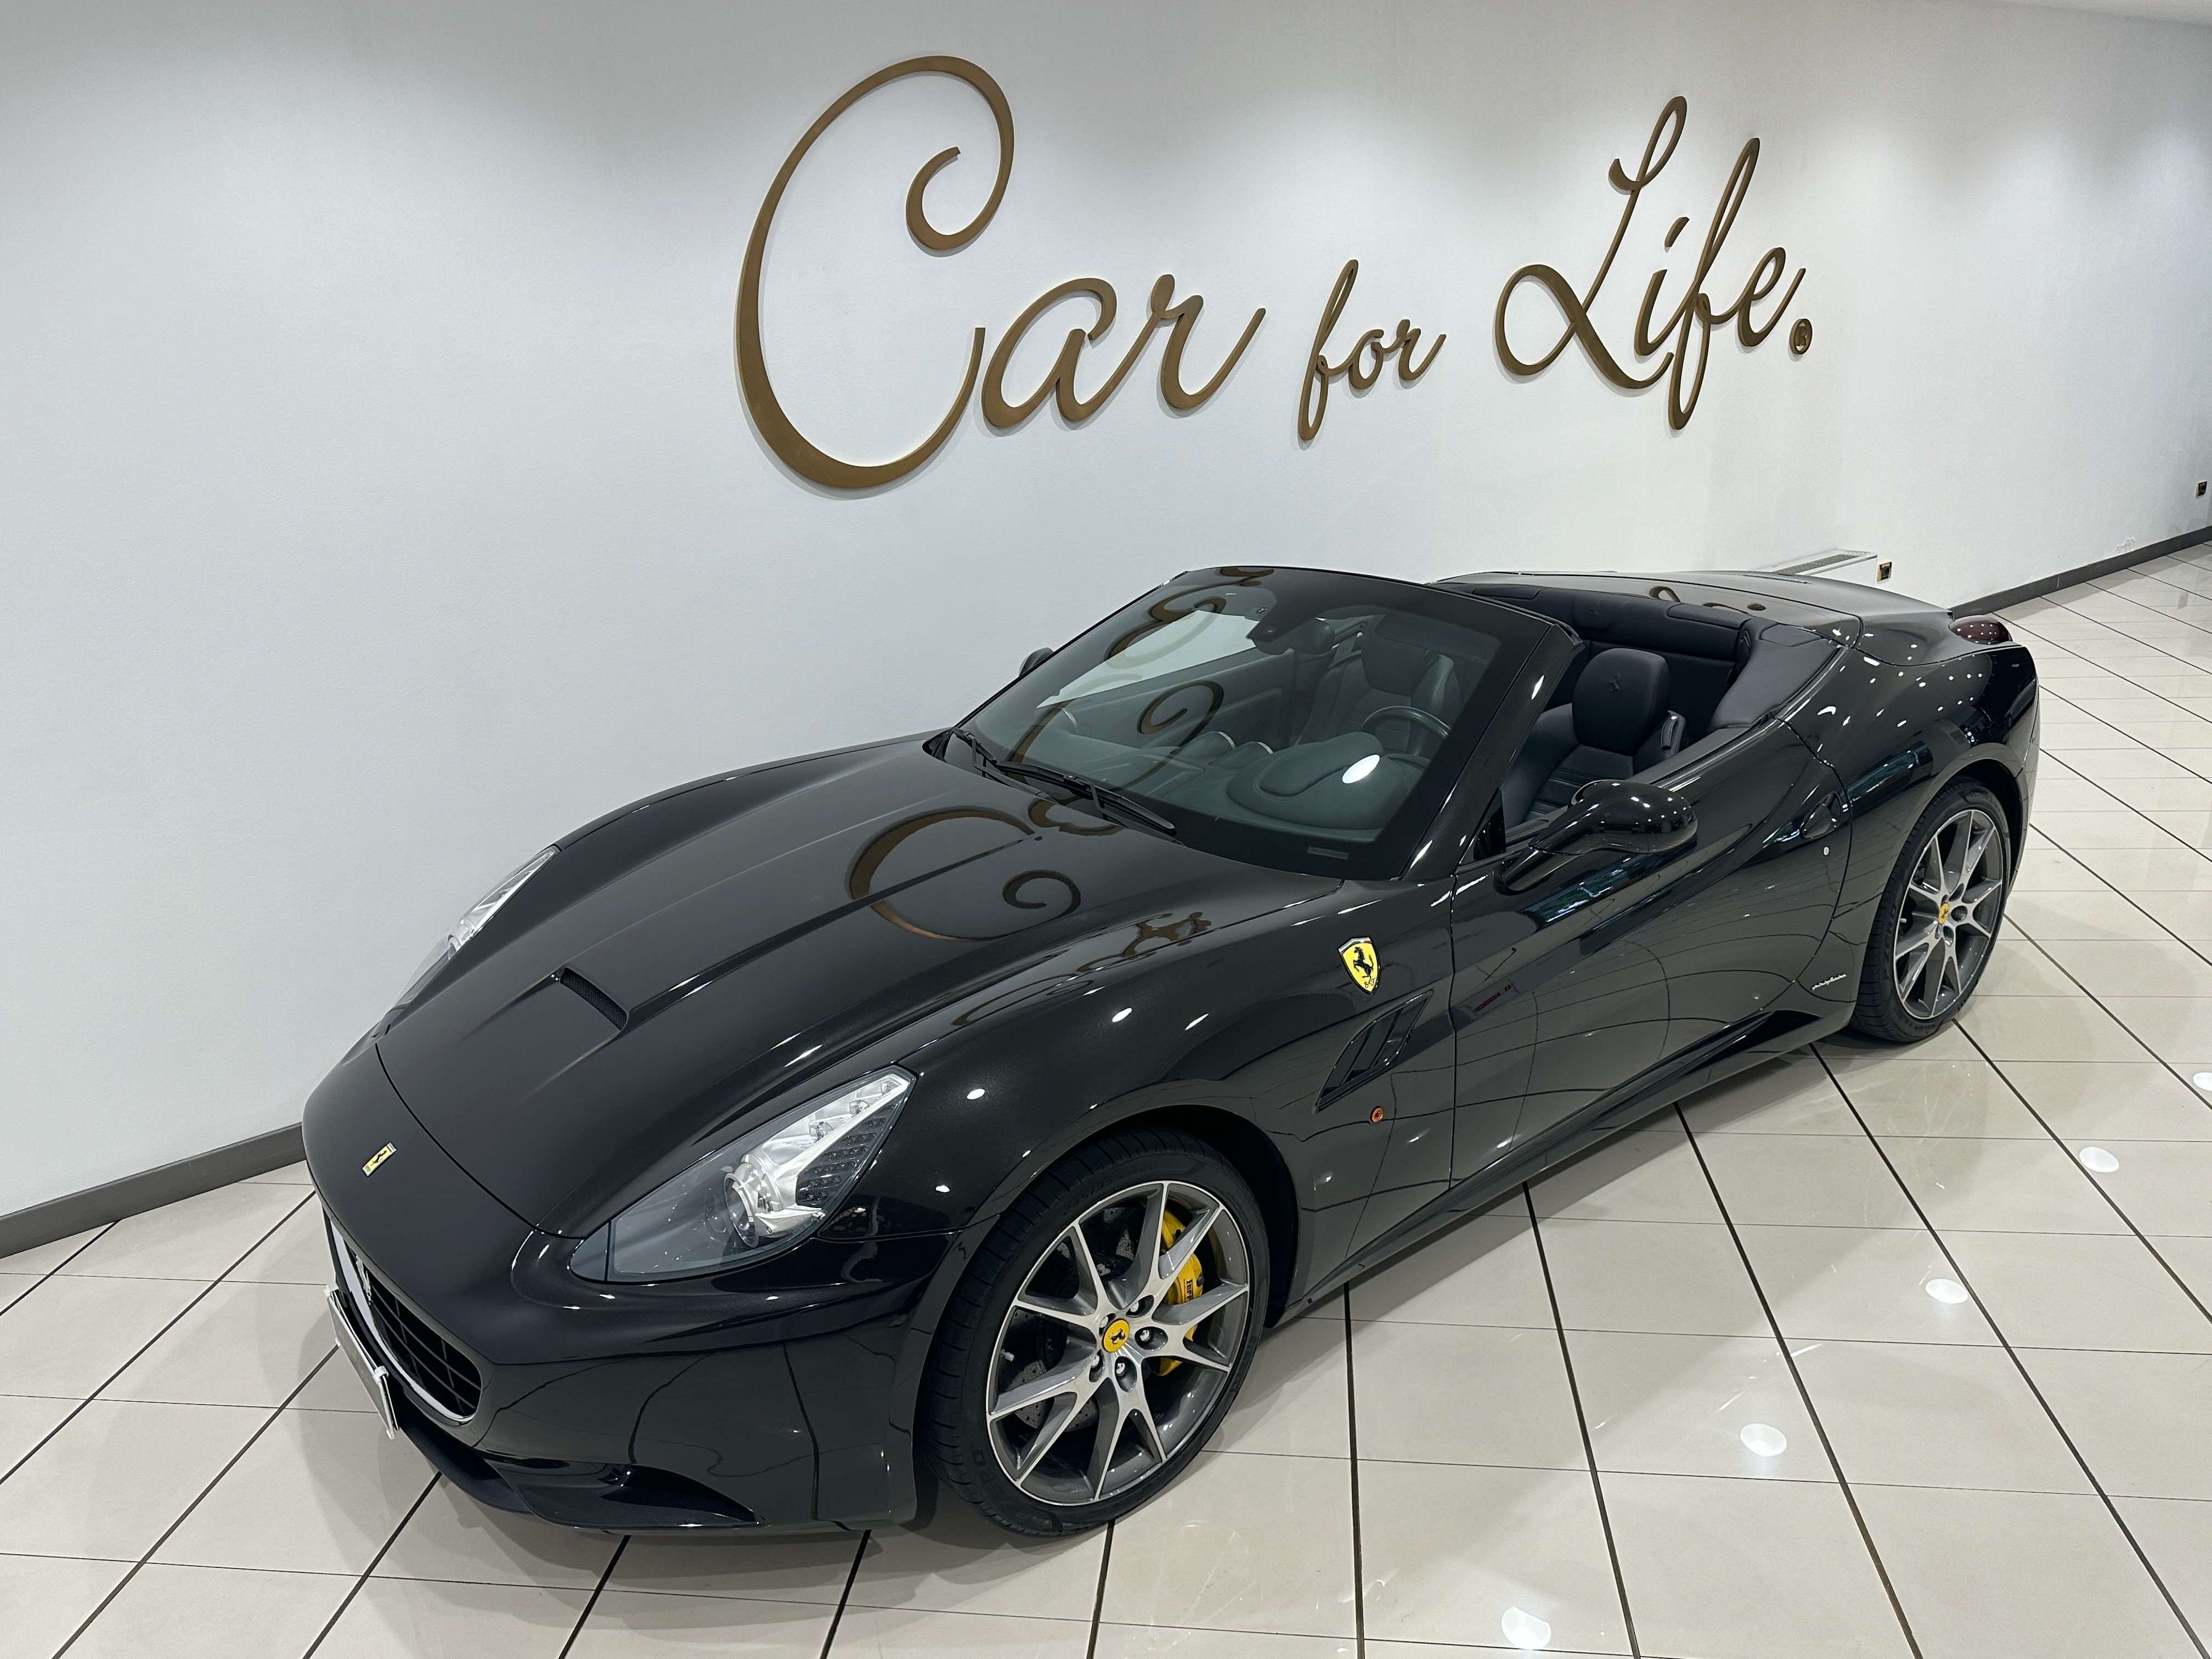 Ferrari California Convertible in Black used in Padova for € 118,900.-